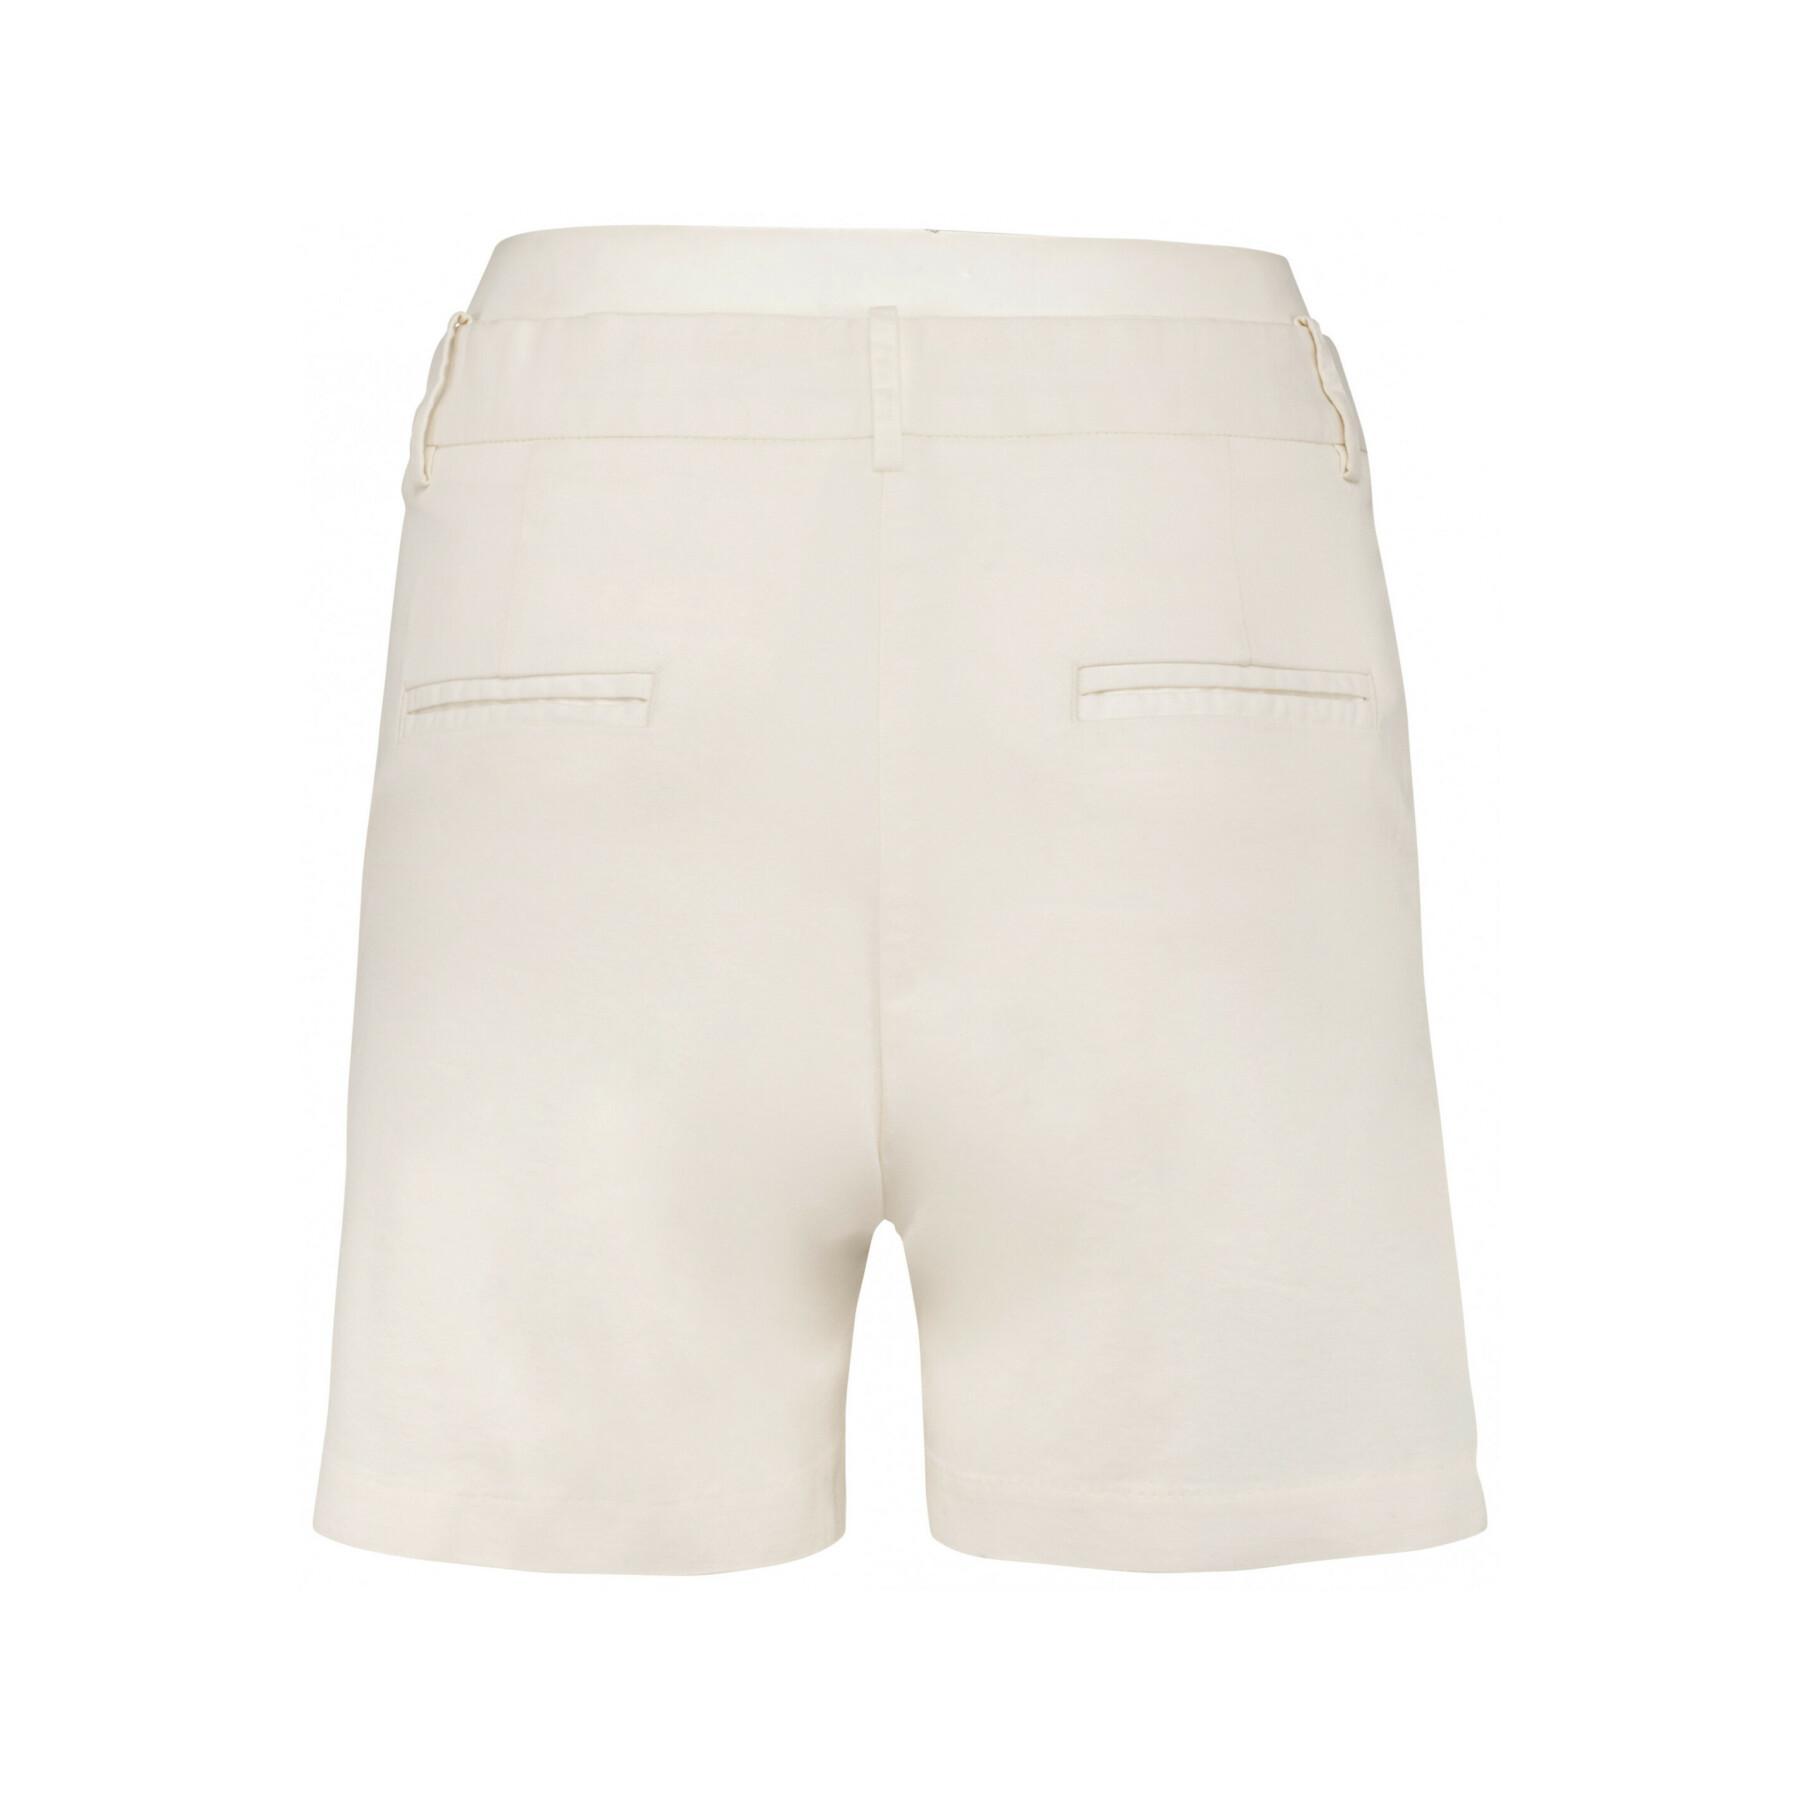 Bermuda-Shorts, Damen Native Spirit